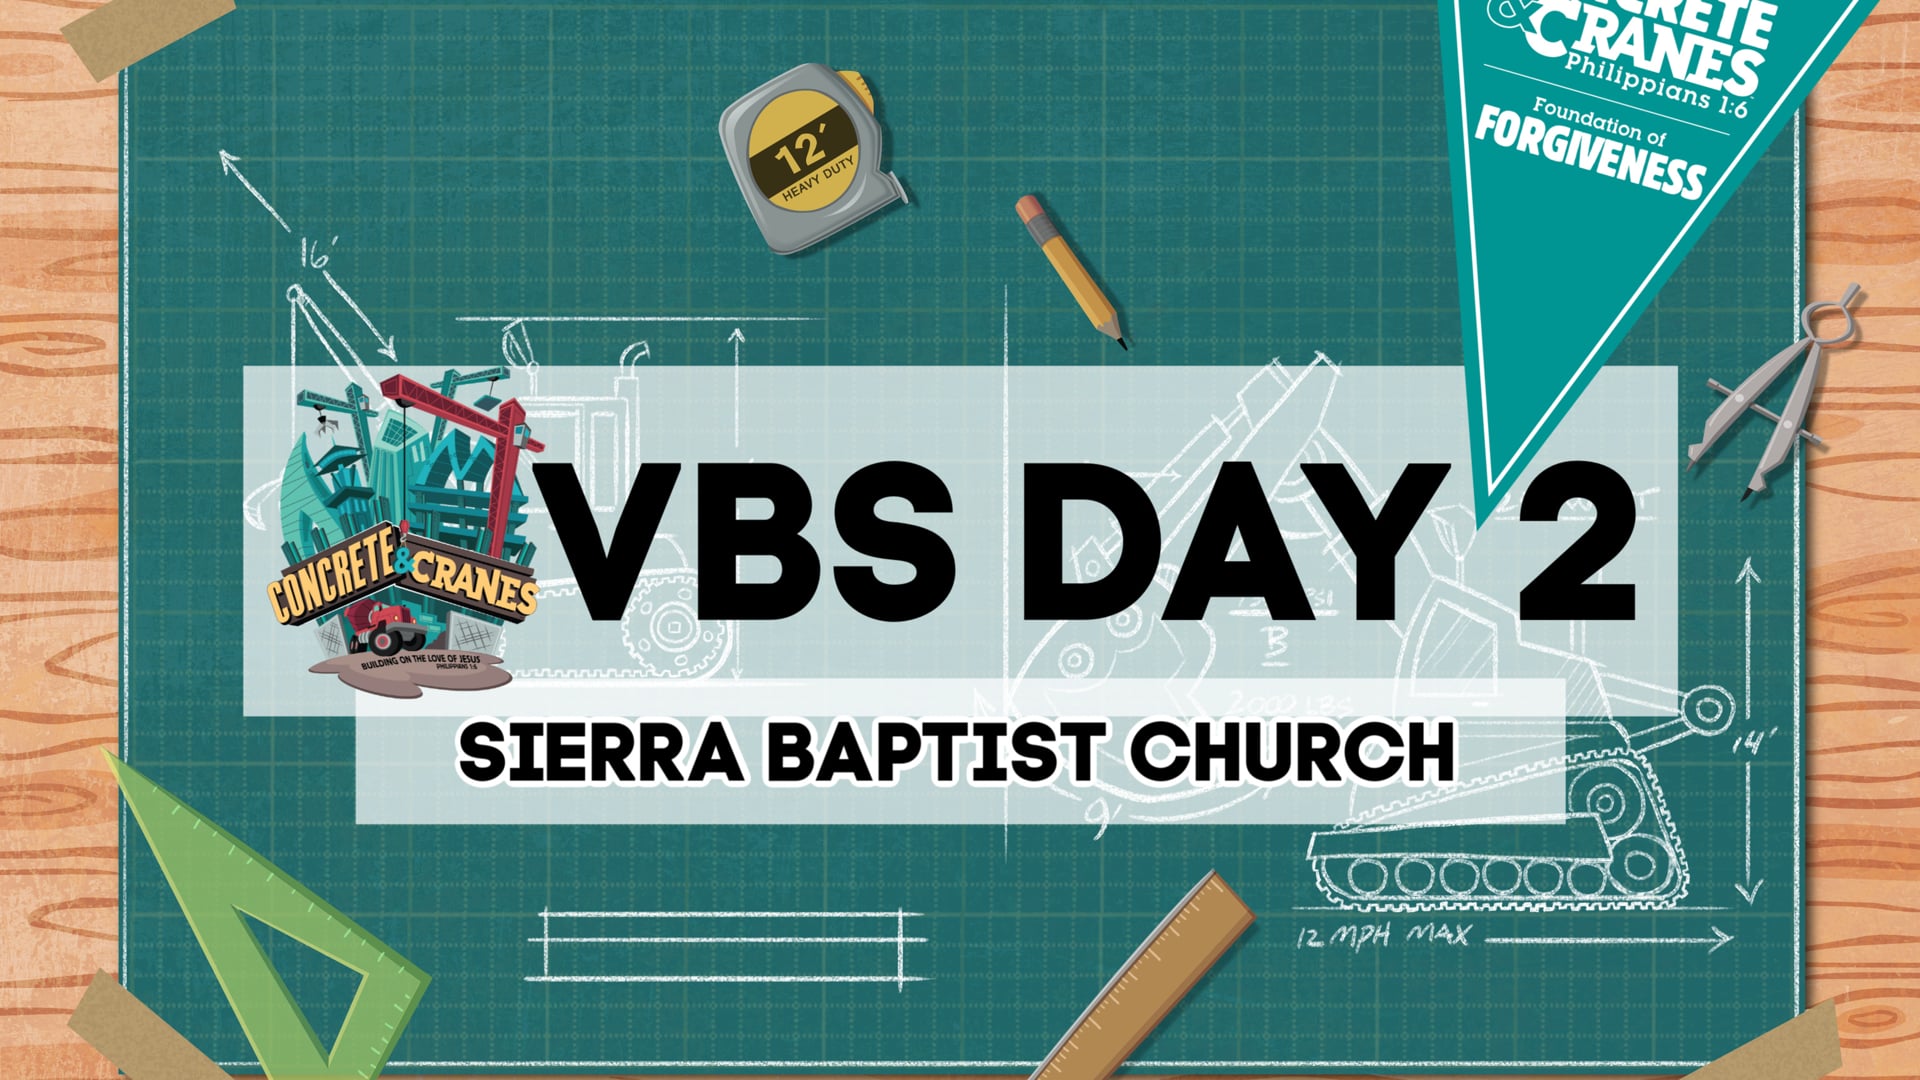 VBS Day 2 - Concrete & Cranes at Sierra Baptist Church